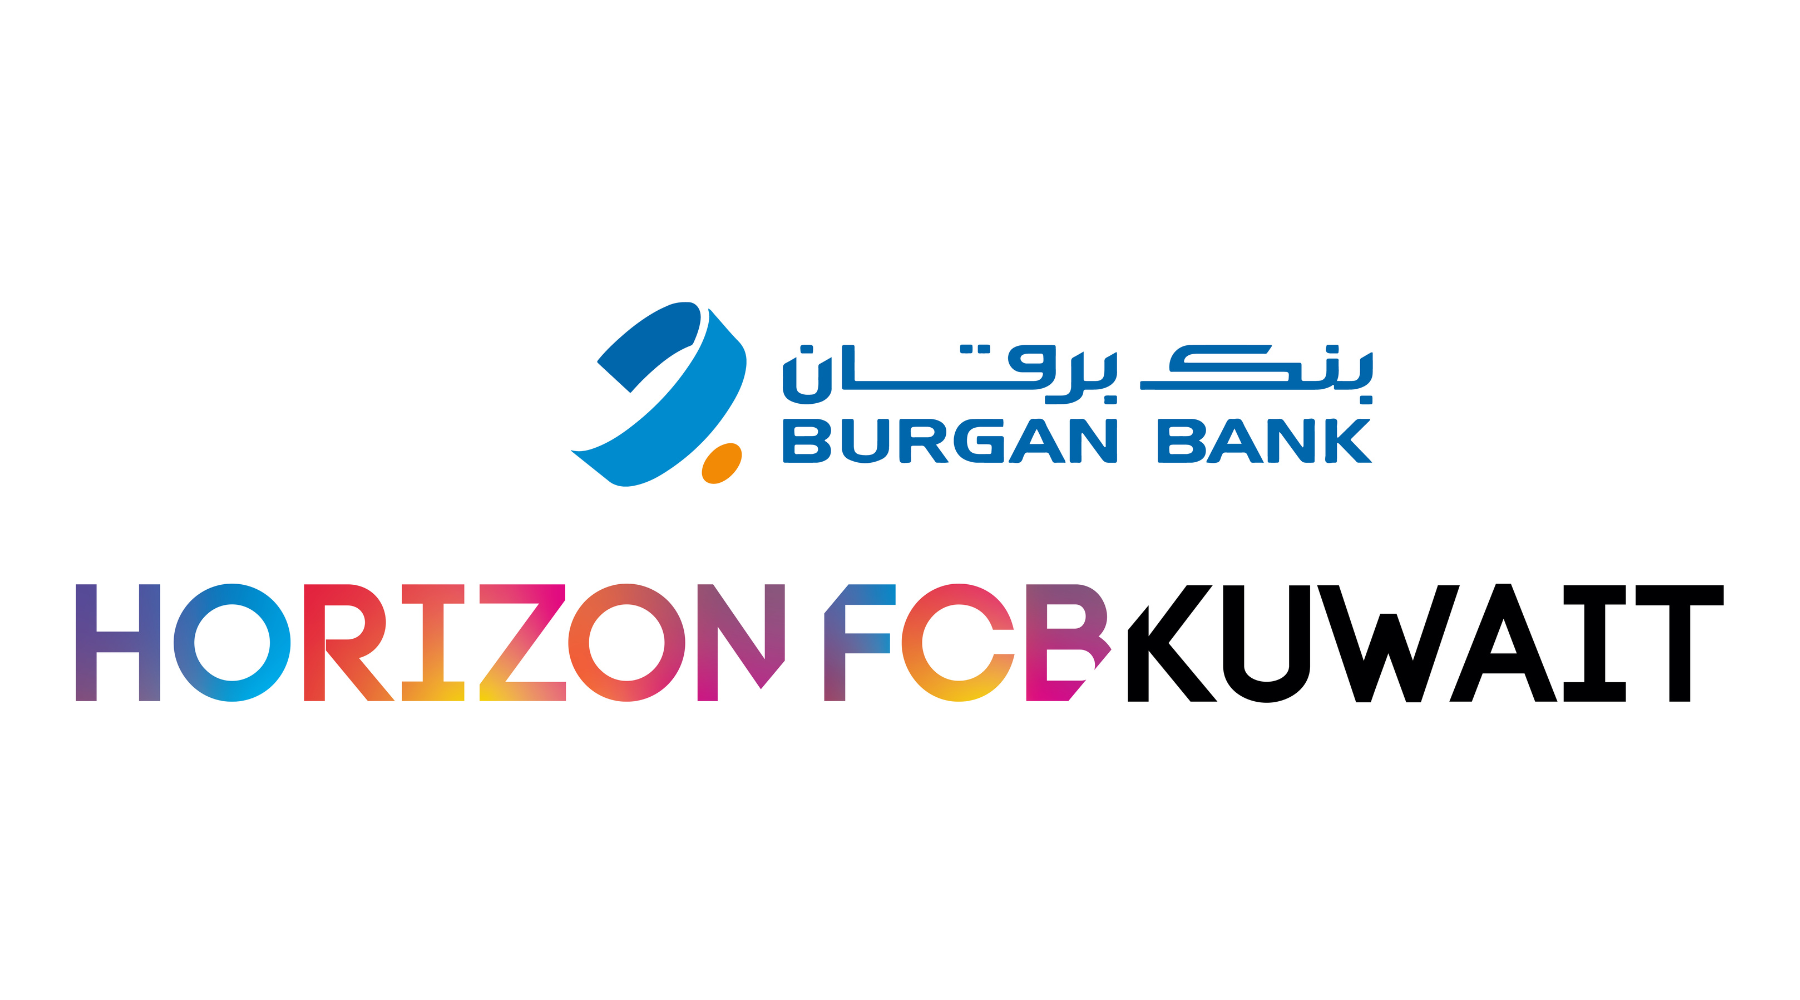 Horizon FCB Kuwait Becomes Lead Agency of Record for Burgan Bank